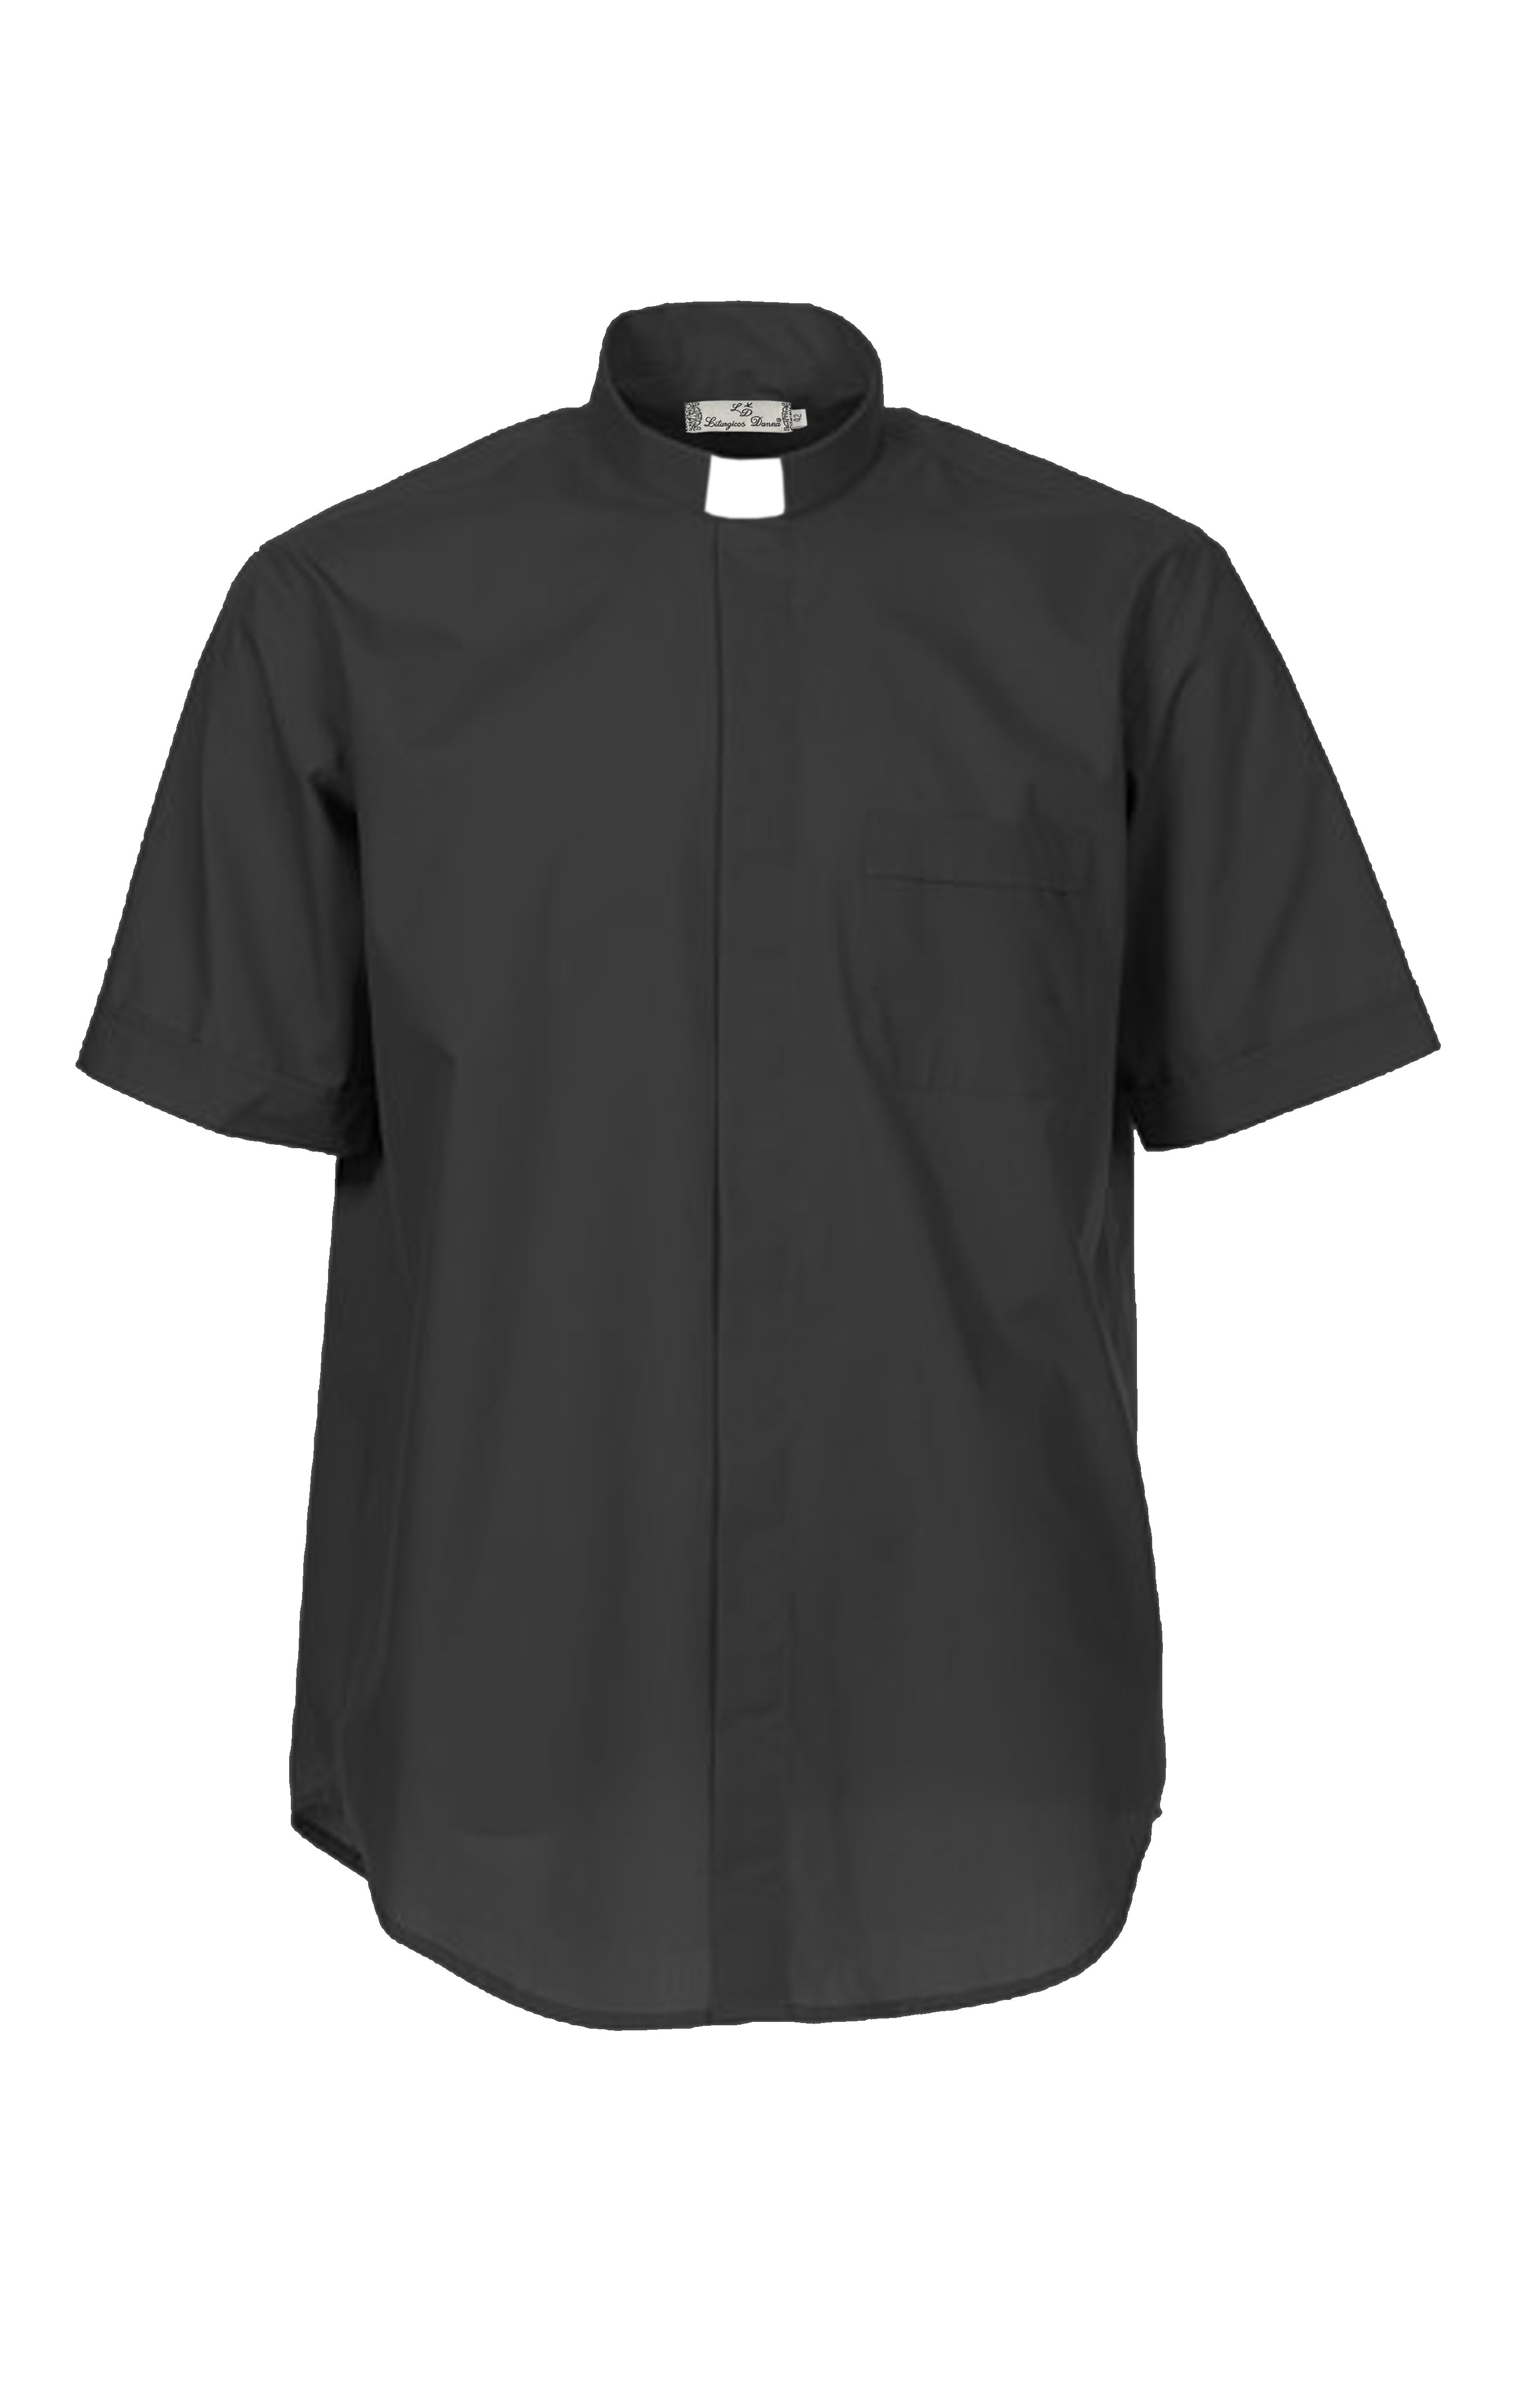 Priests & Clergy Shirts - Short & Long sleeve / Camisas de Sacerdote Manga Corta y Larga - Cuello clergyman